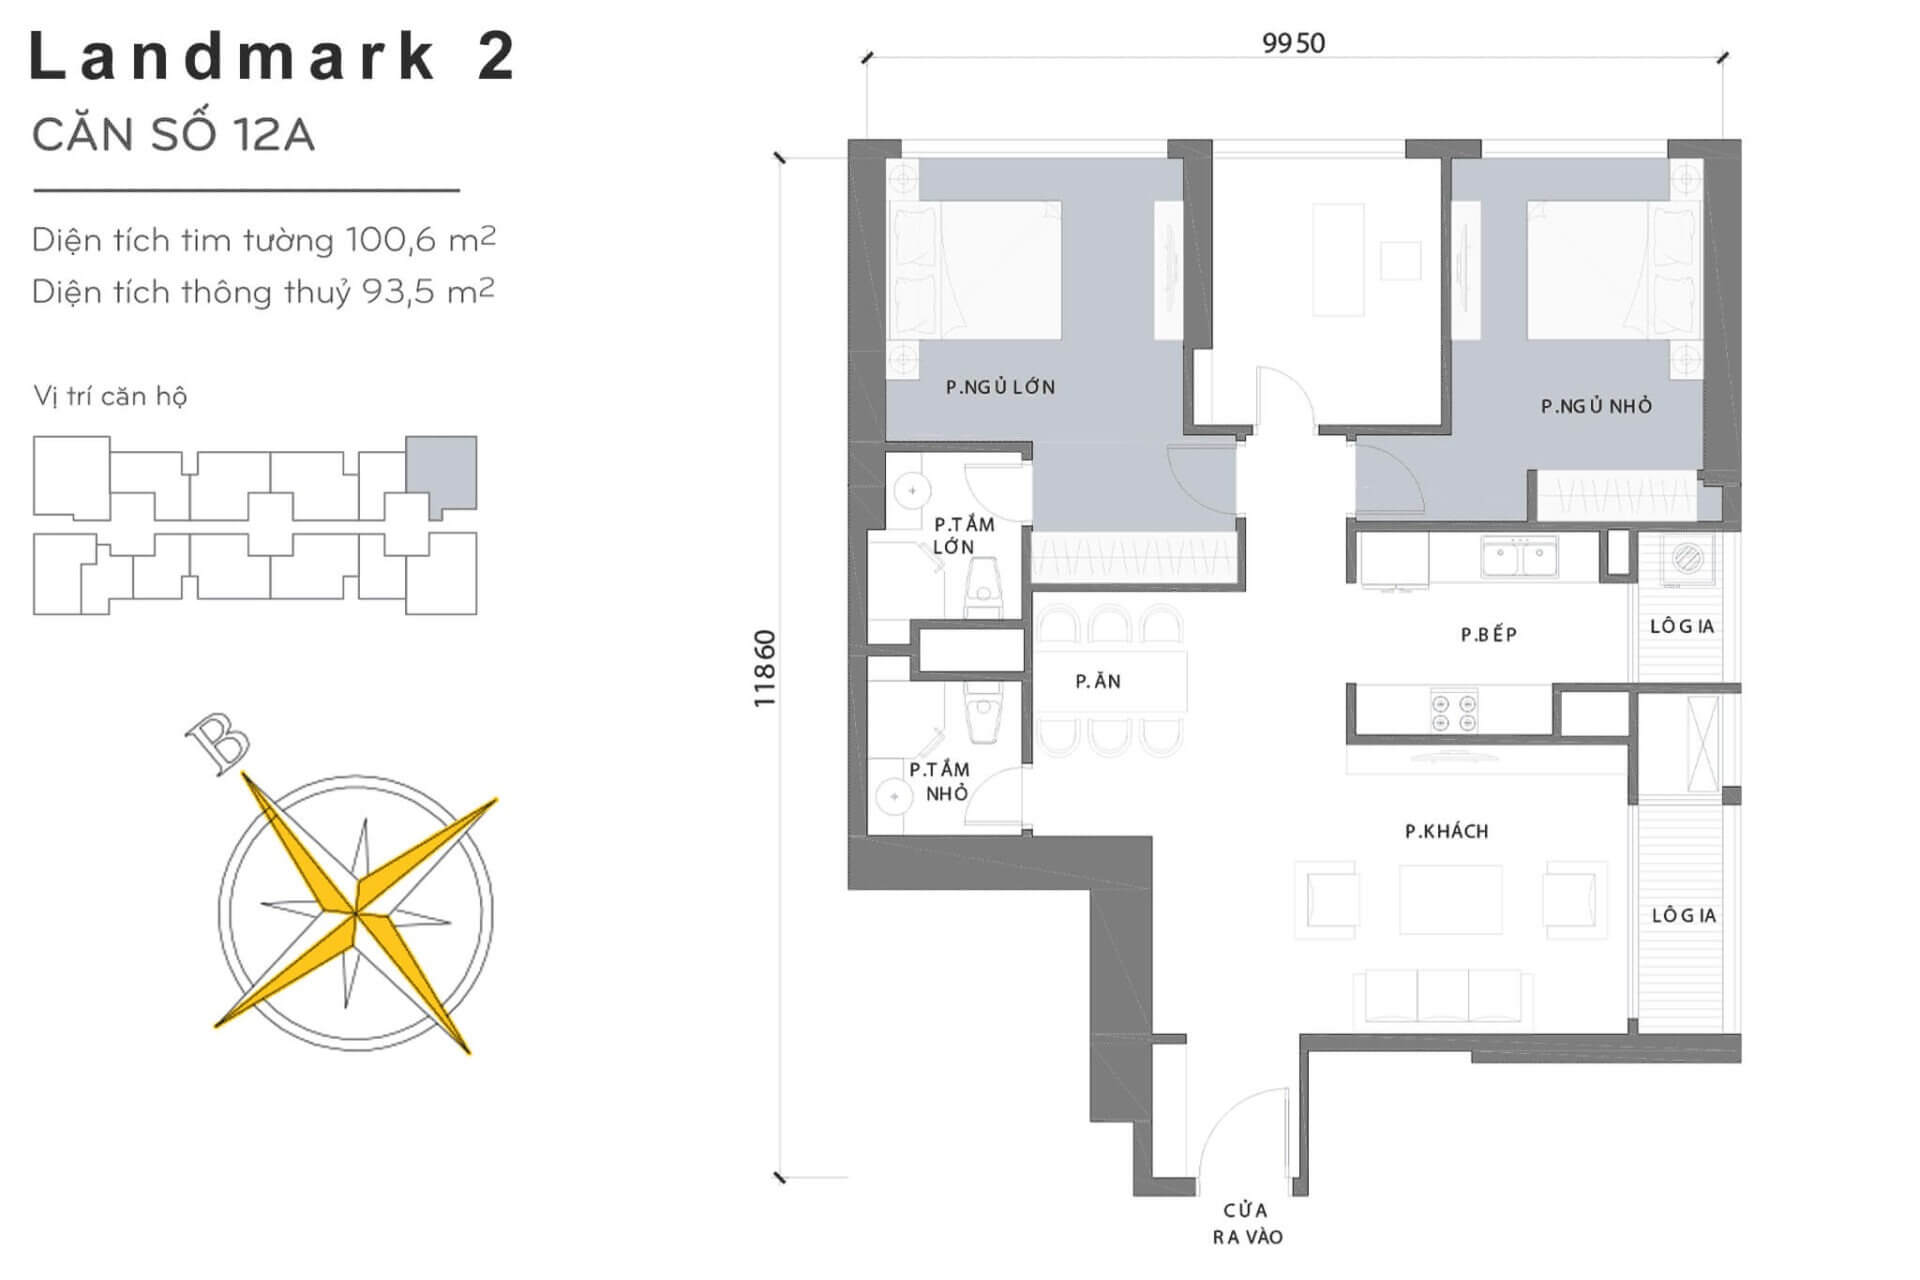 layout căn hộ số 12A Landmark 2 L2-12A